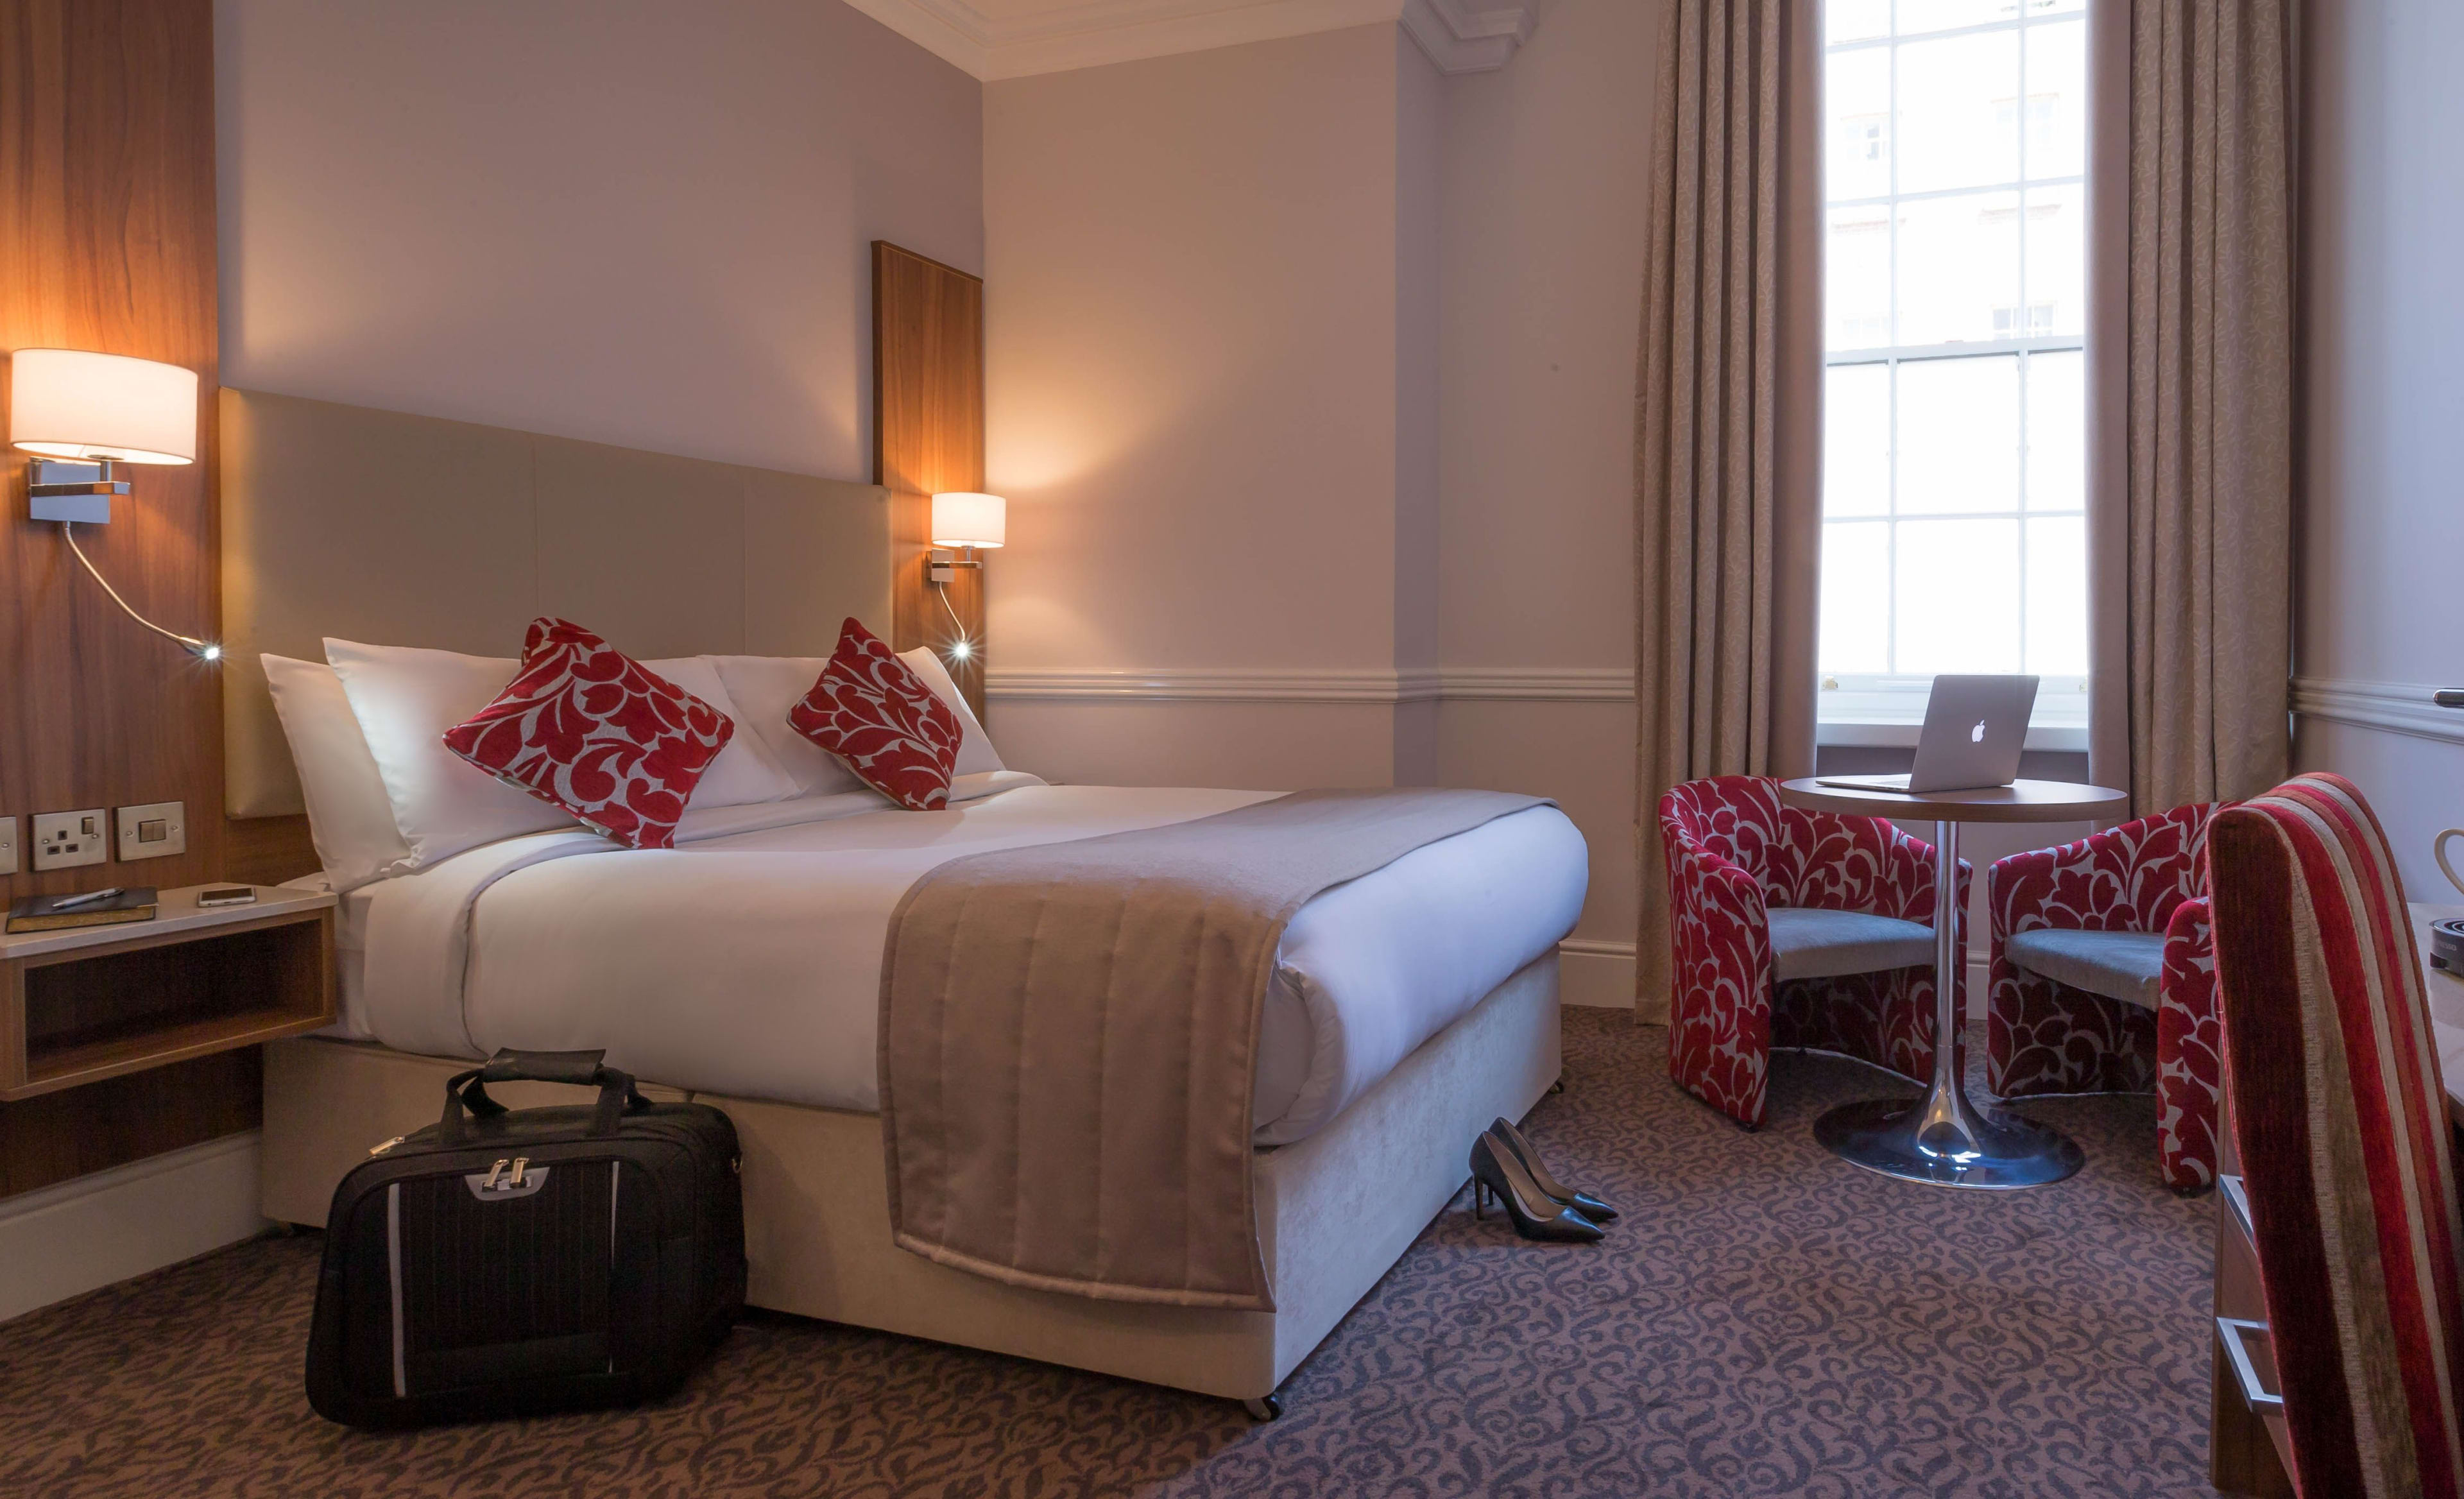 Standard Rooms at Belvedere Hotel